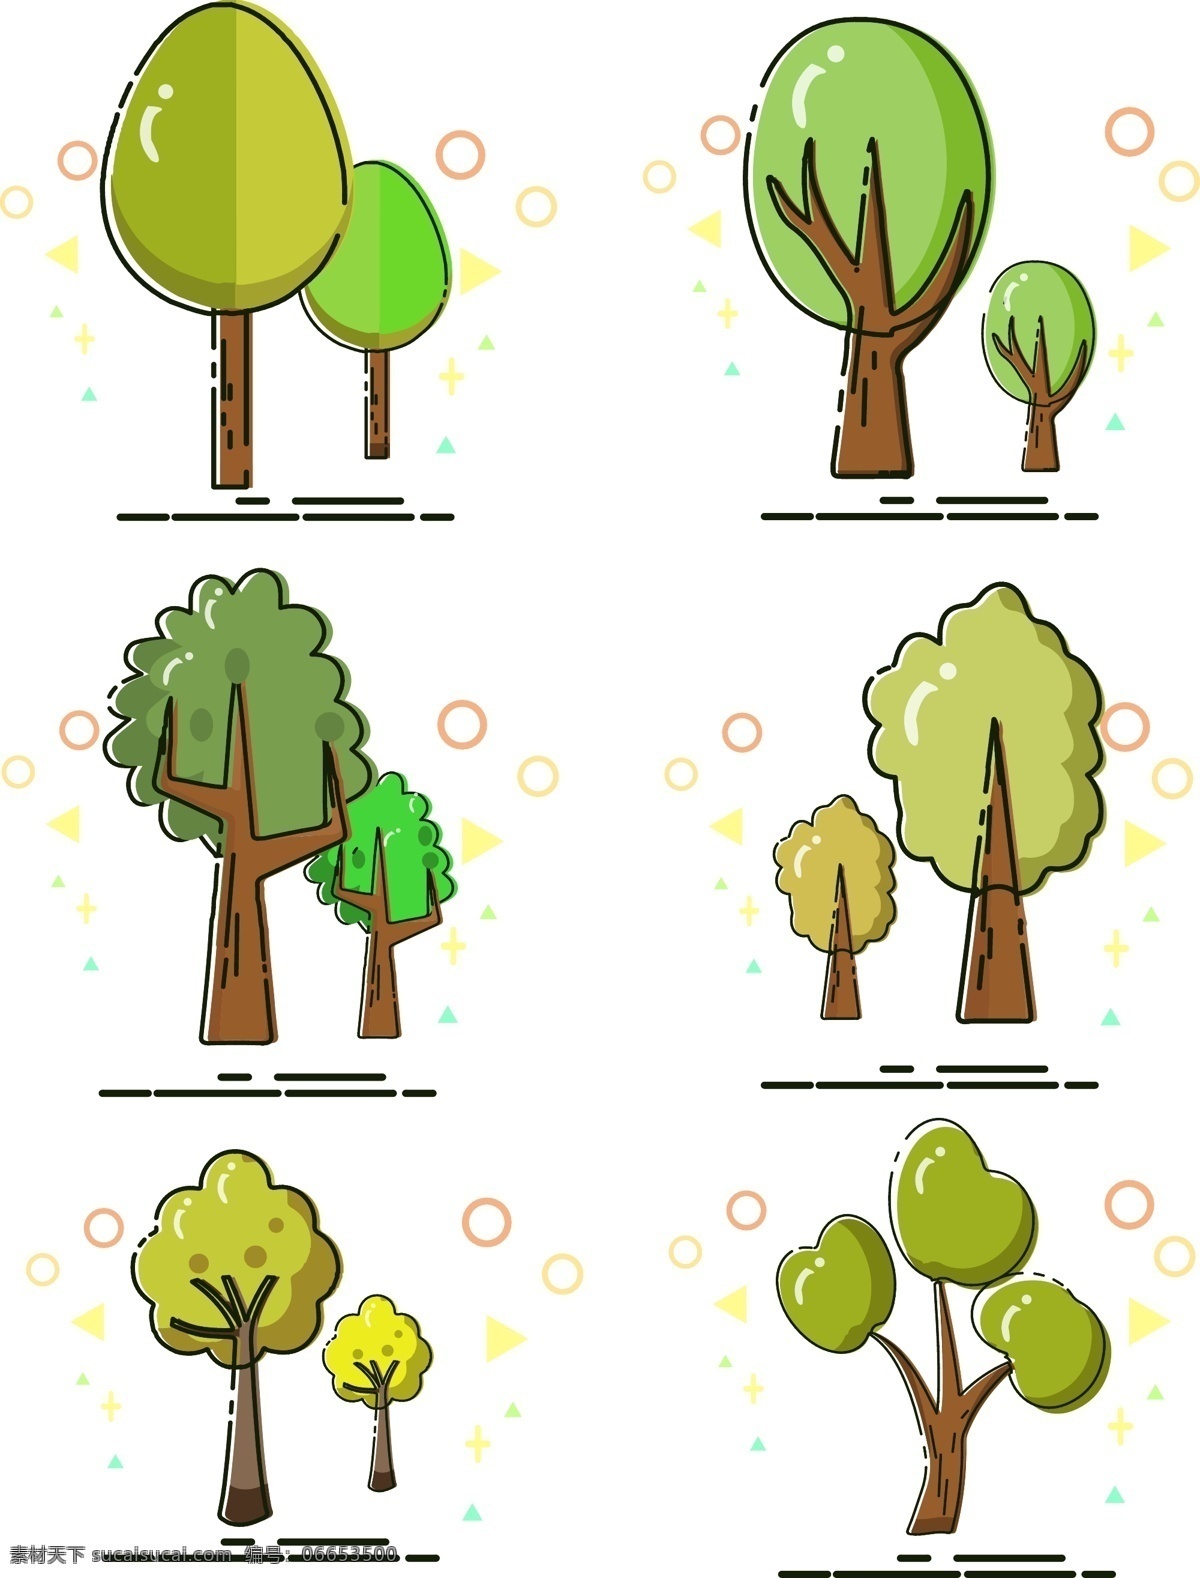 meb 风格 卡通 树木 集合 商用 可爱 绿色